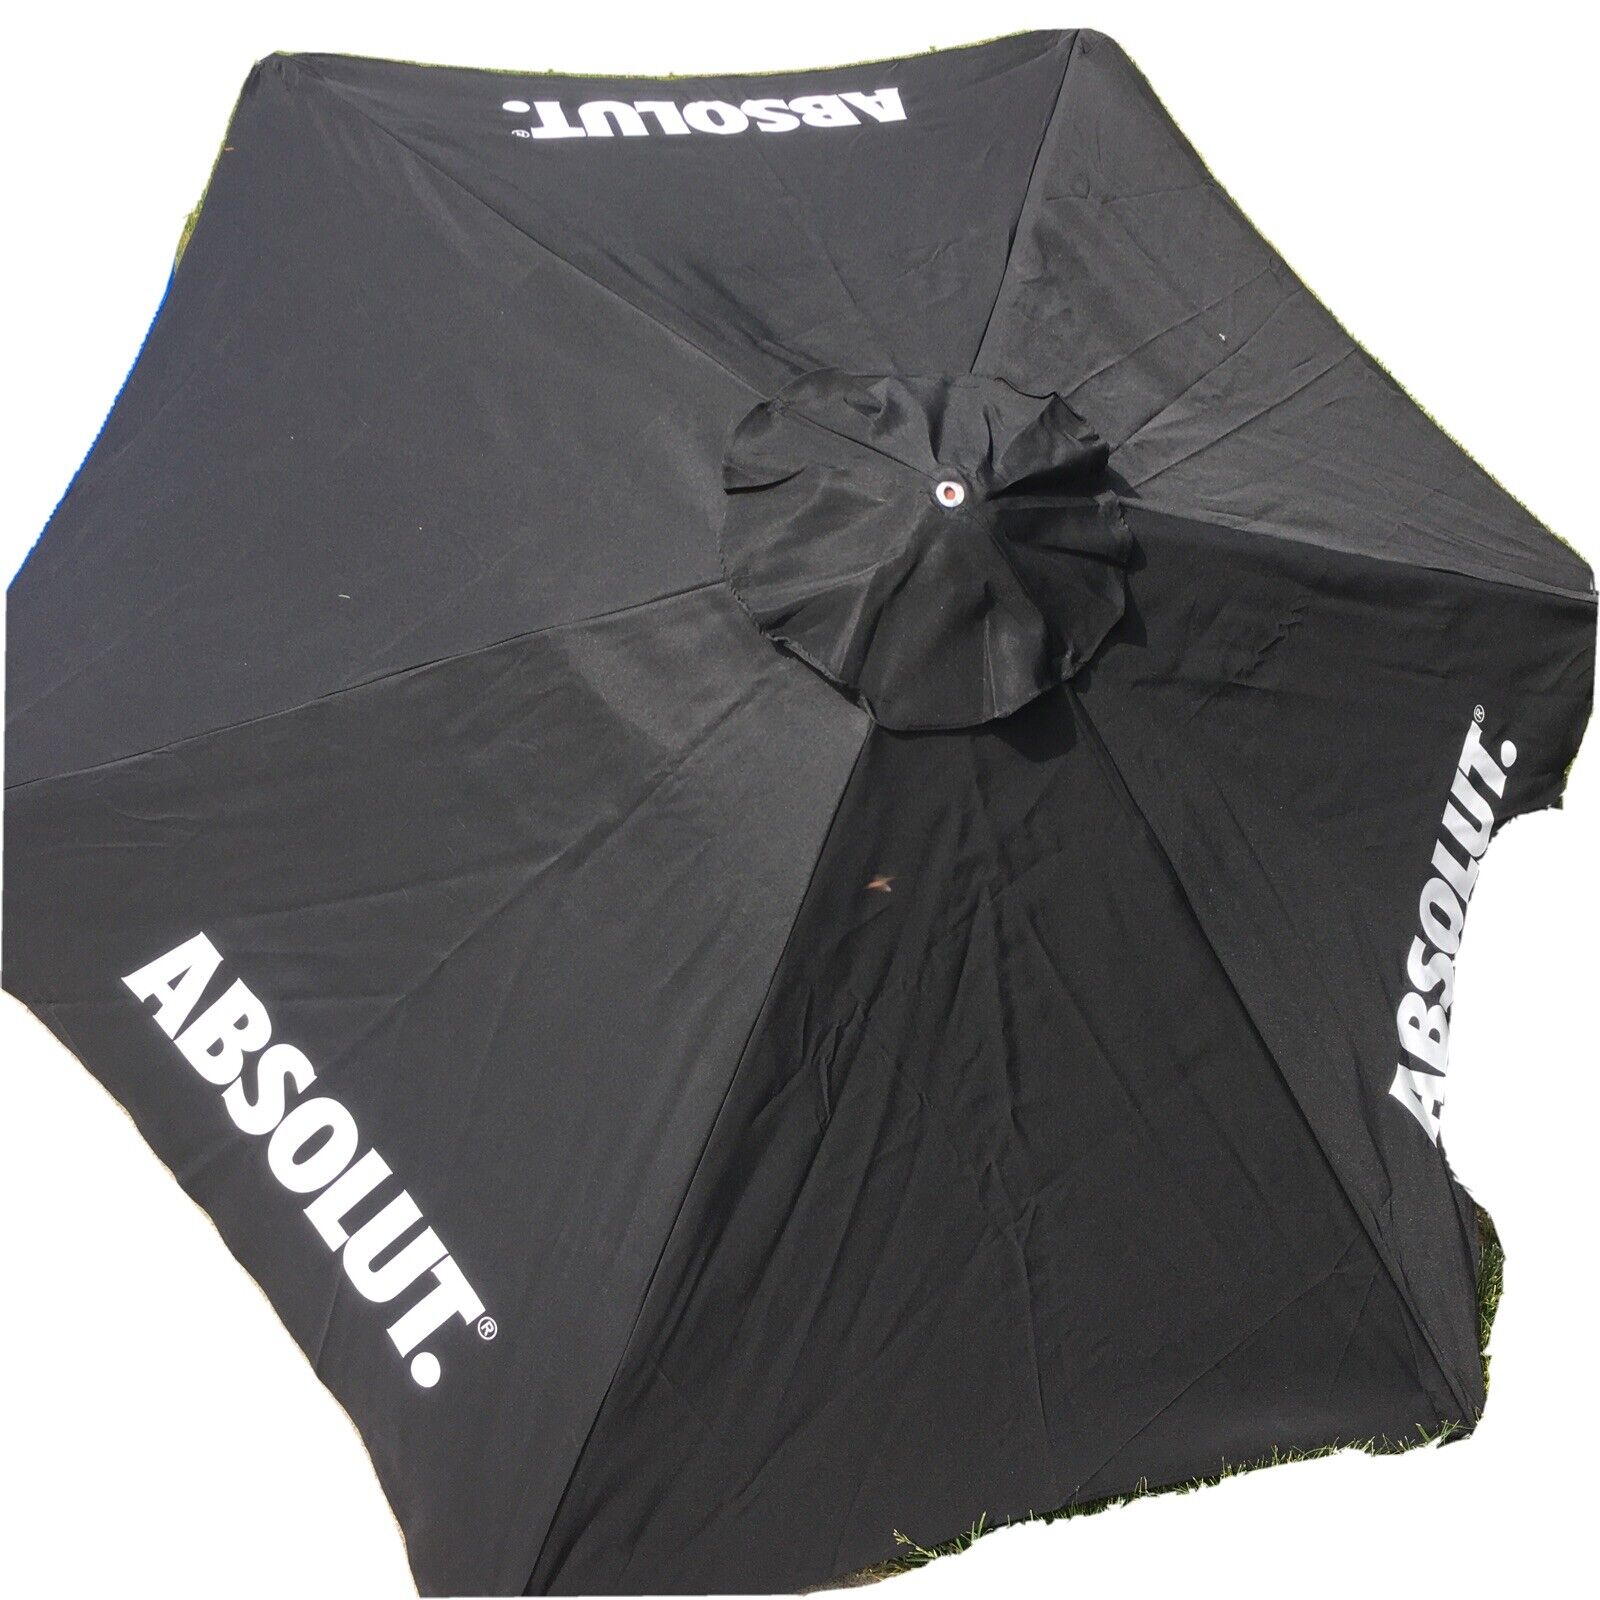 Absolut Patio Umbrella 8’ Tall Brand New In Box